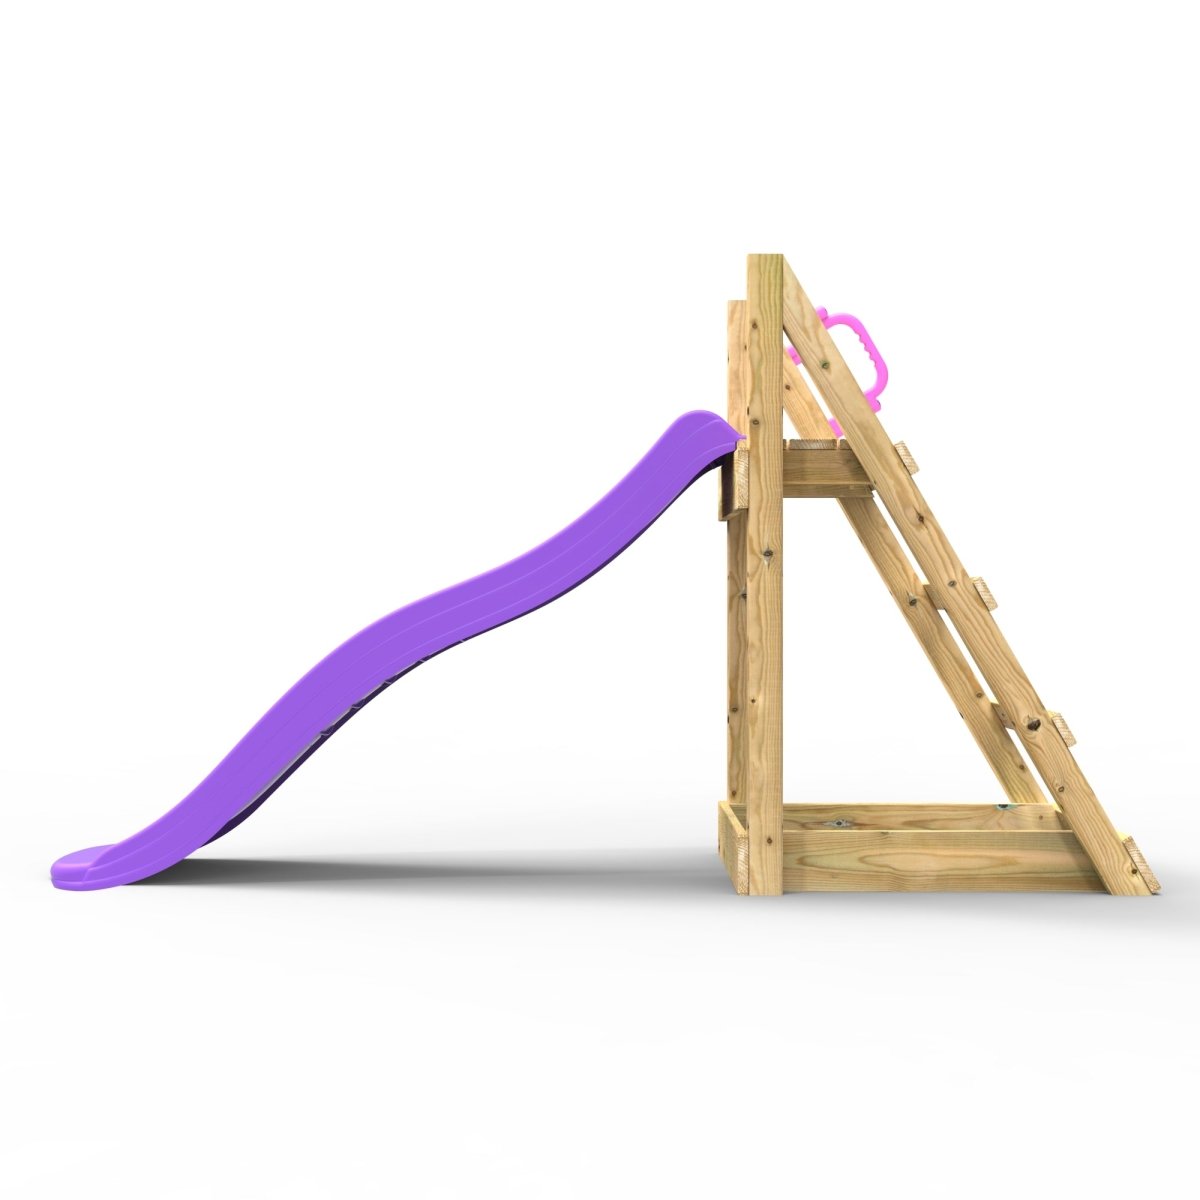 Rebo Free Standing Garden Wave Water Slide with Wooden Platform - 6ft slide Purple